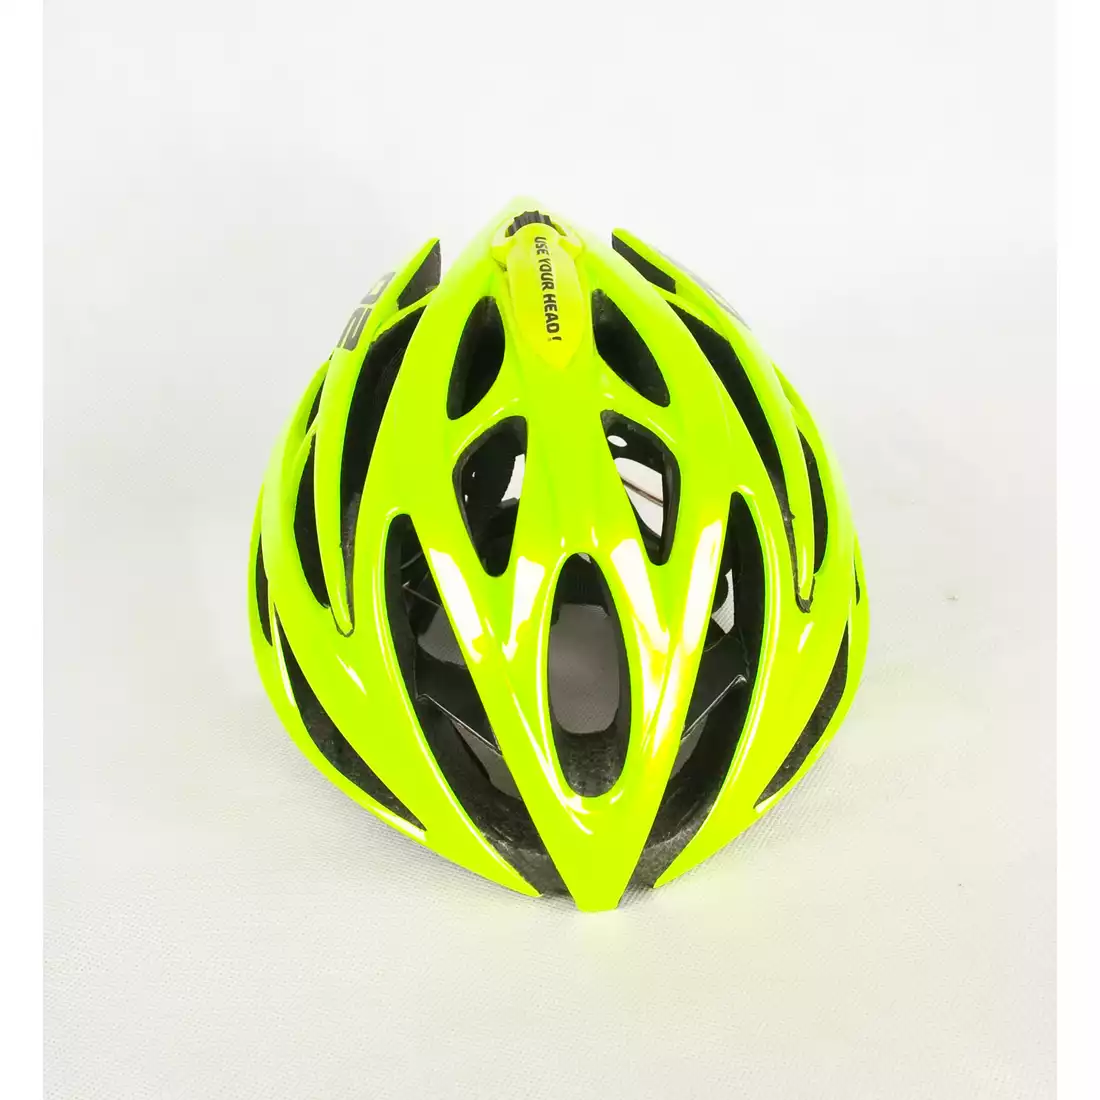 LAZER O2 cyklistická helma, žlutá